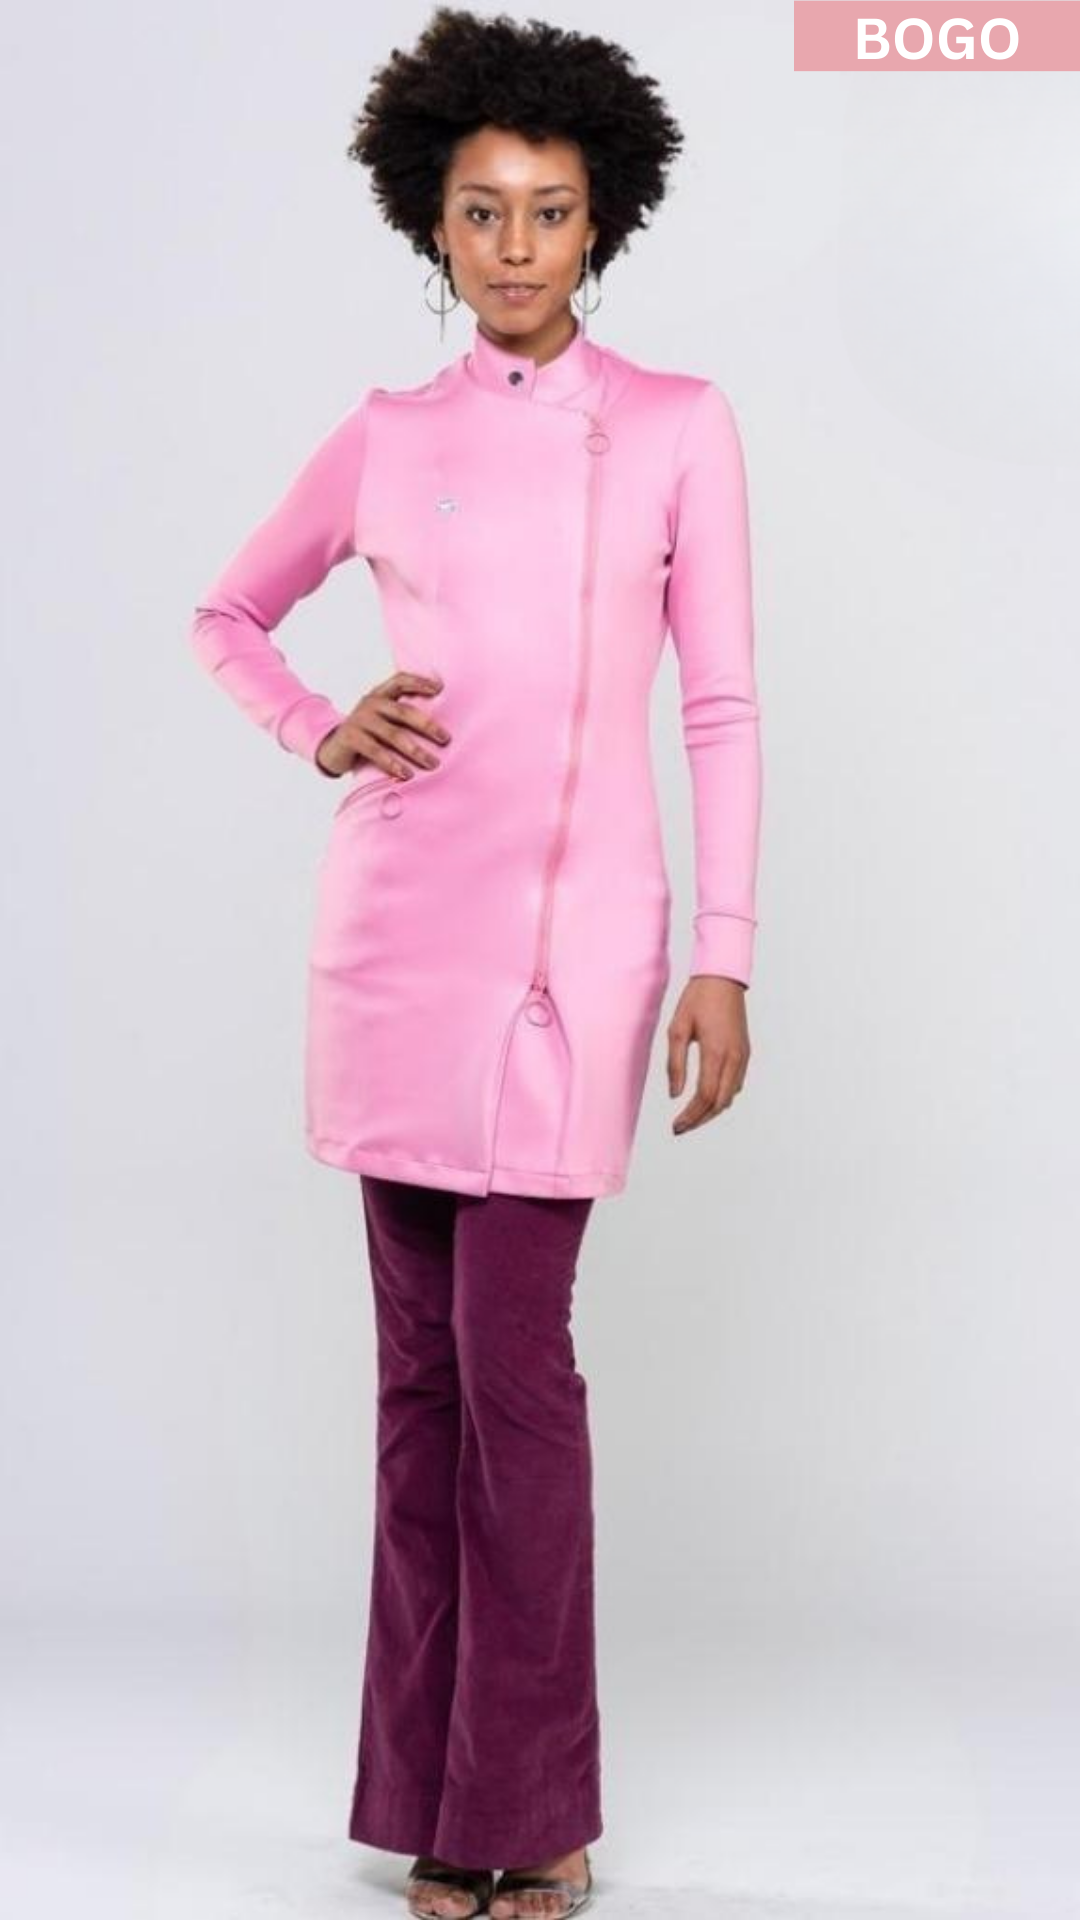 Coats & Scrubs Women's Oregon Pink Lab Coat